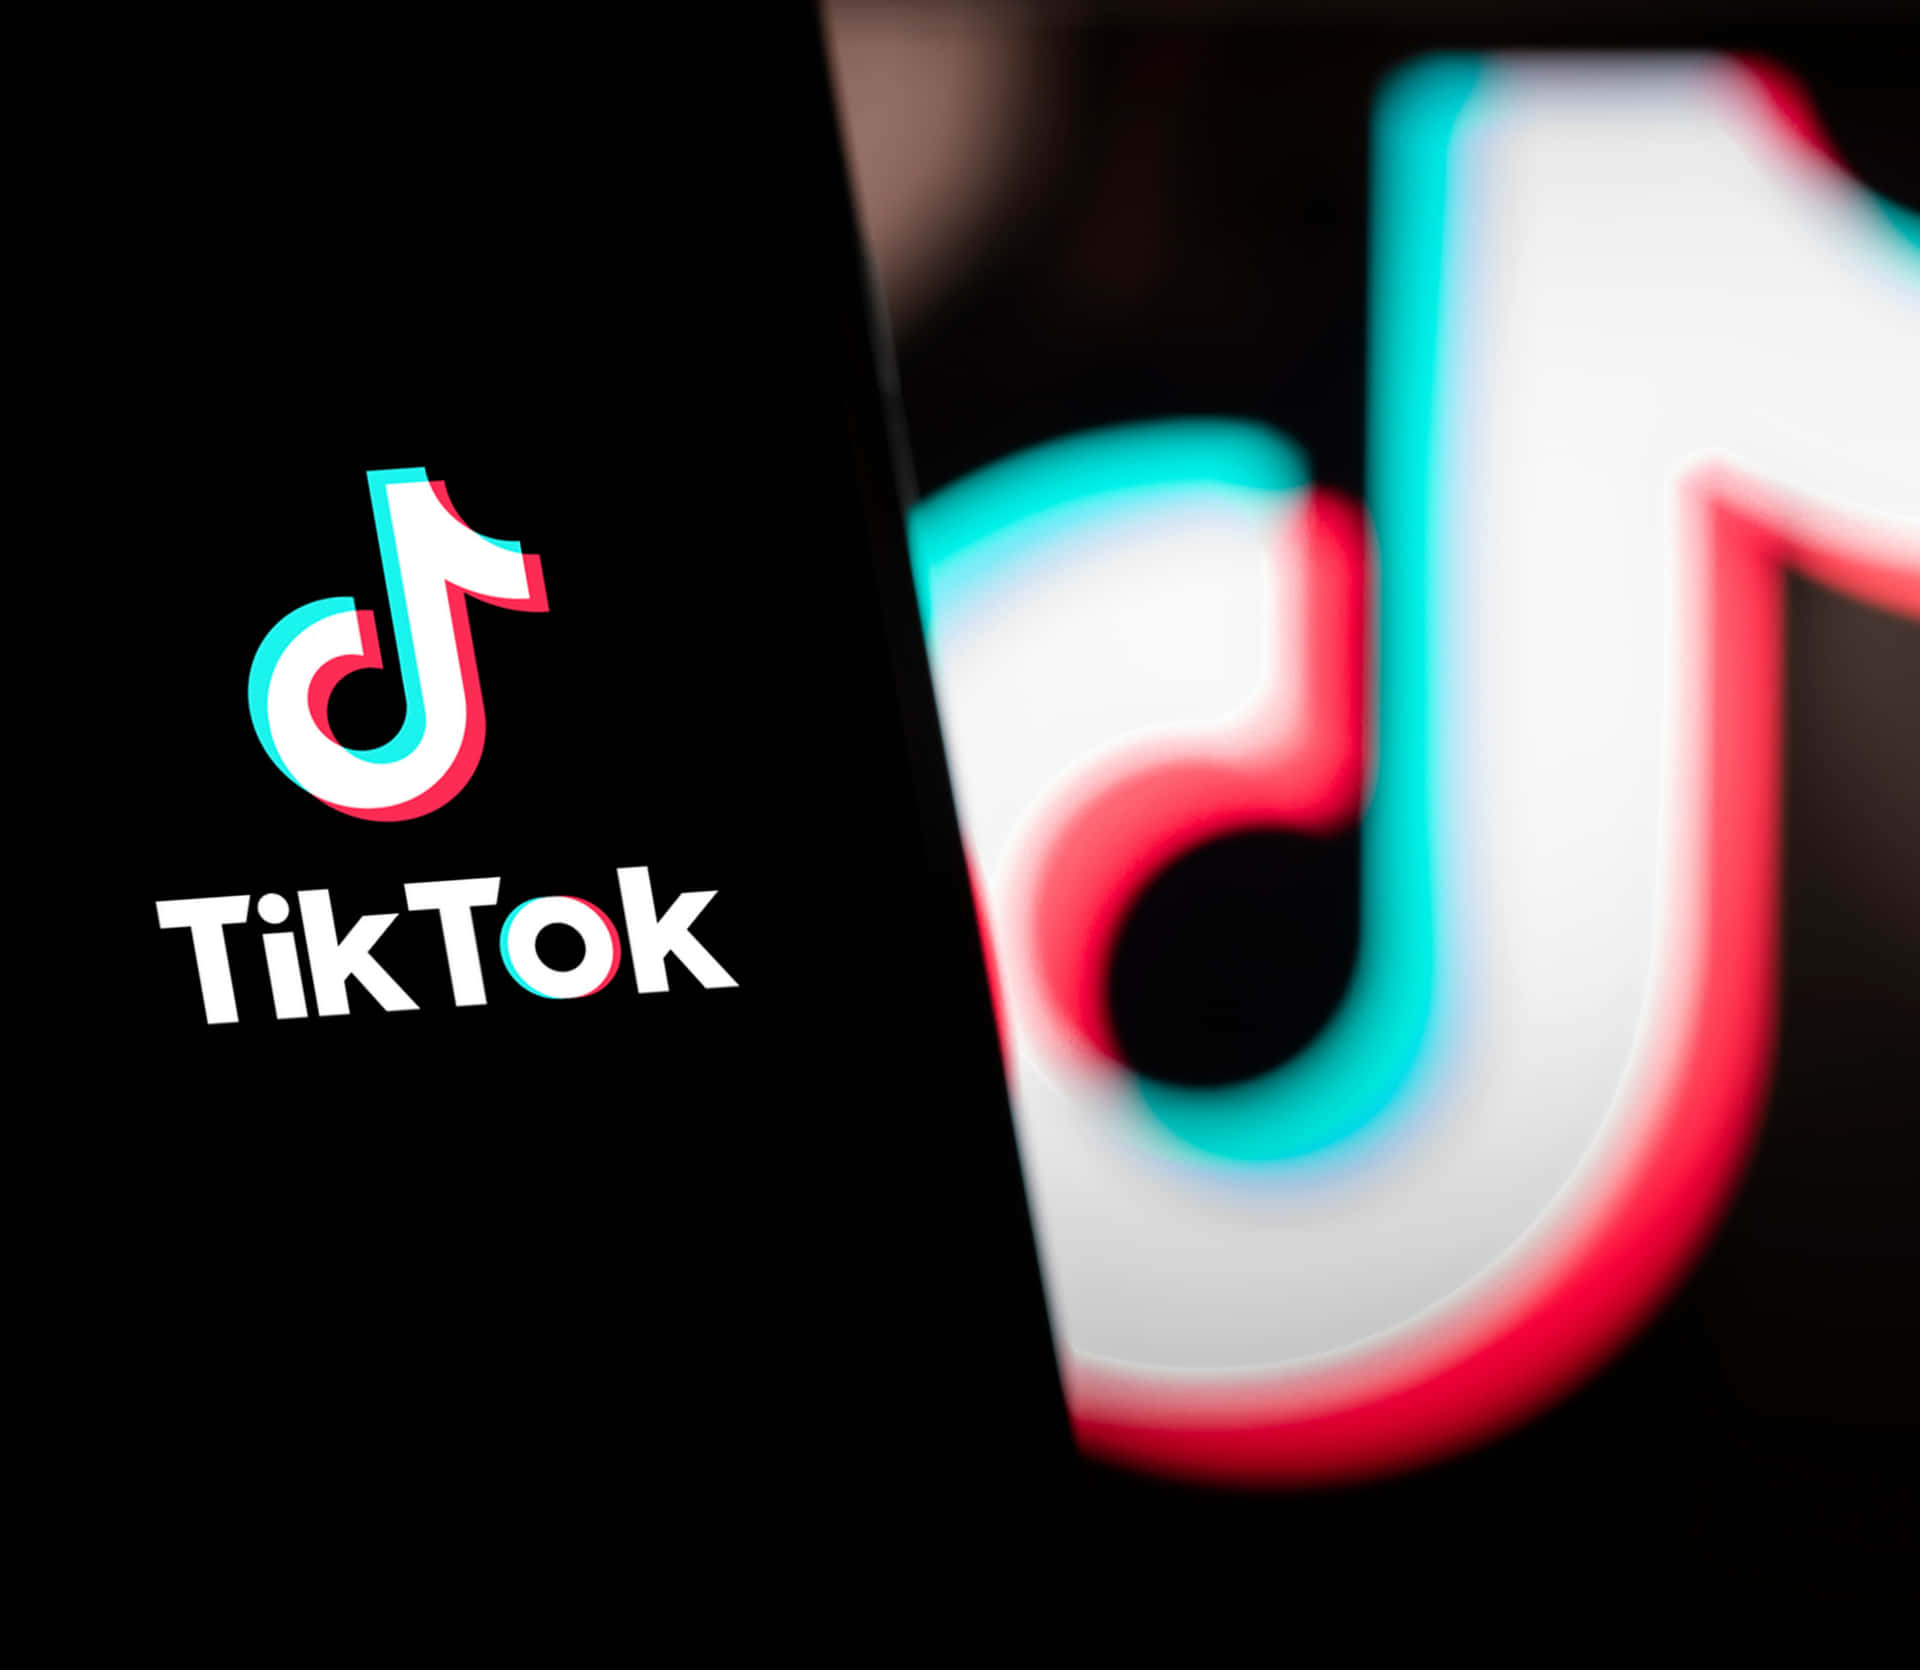 tiktok logo with a black background Wallpaper